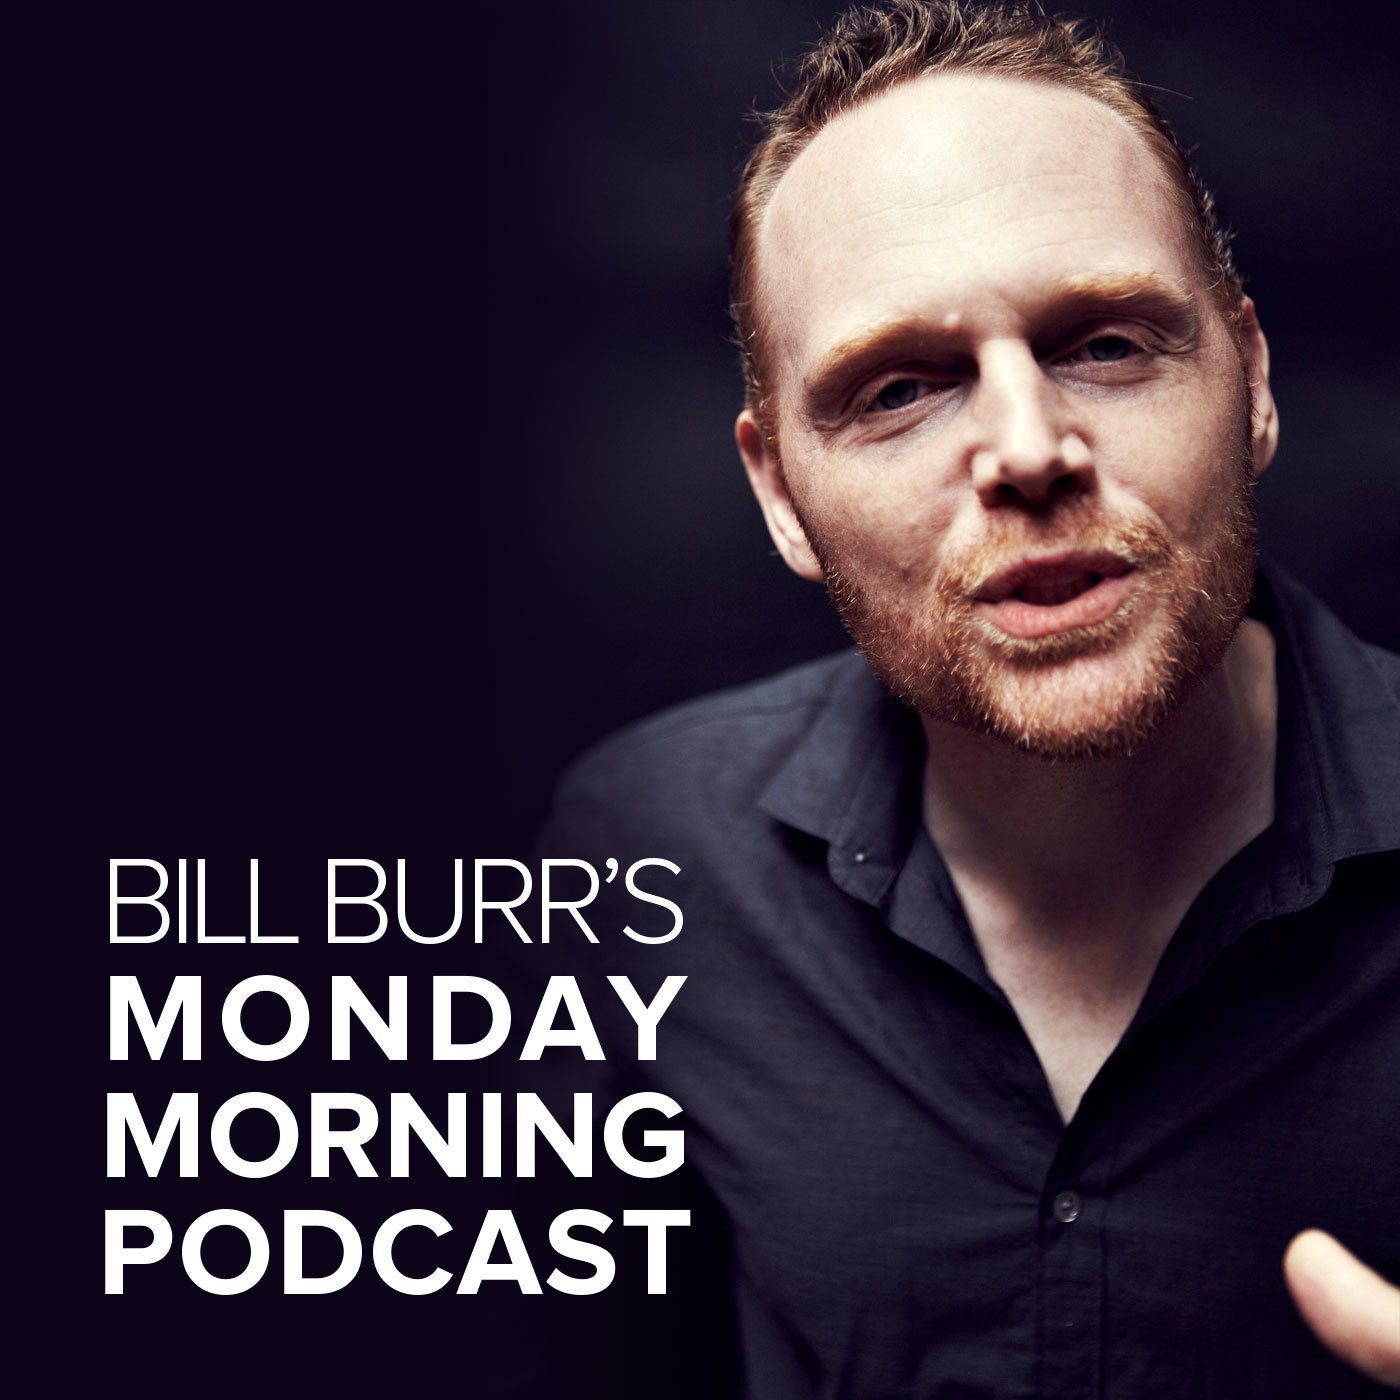 Monday Morning Podcast 11-4-13